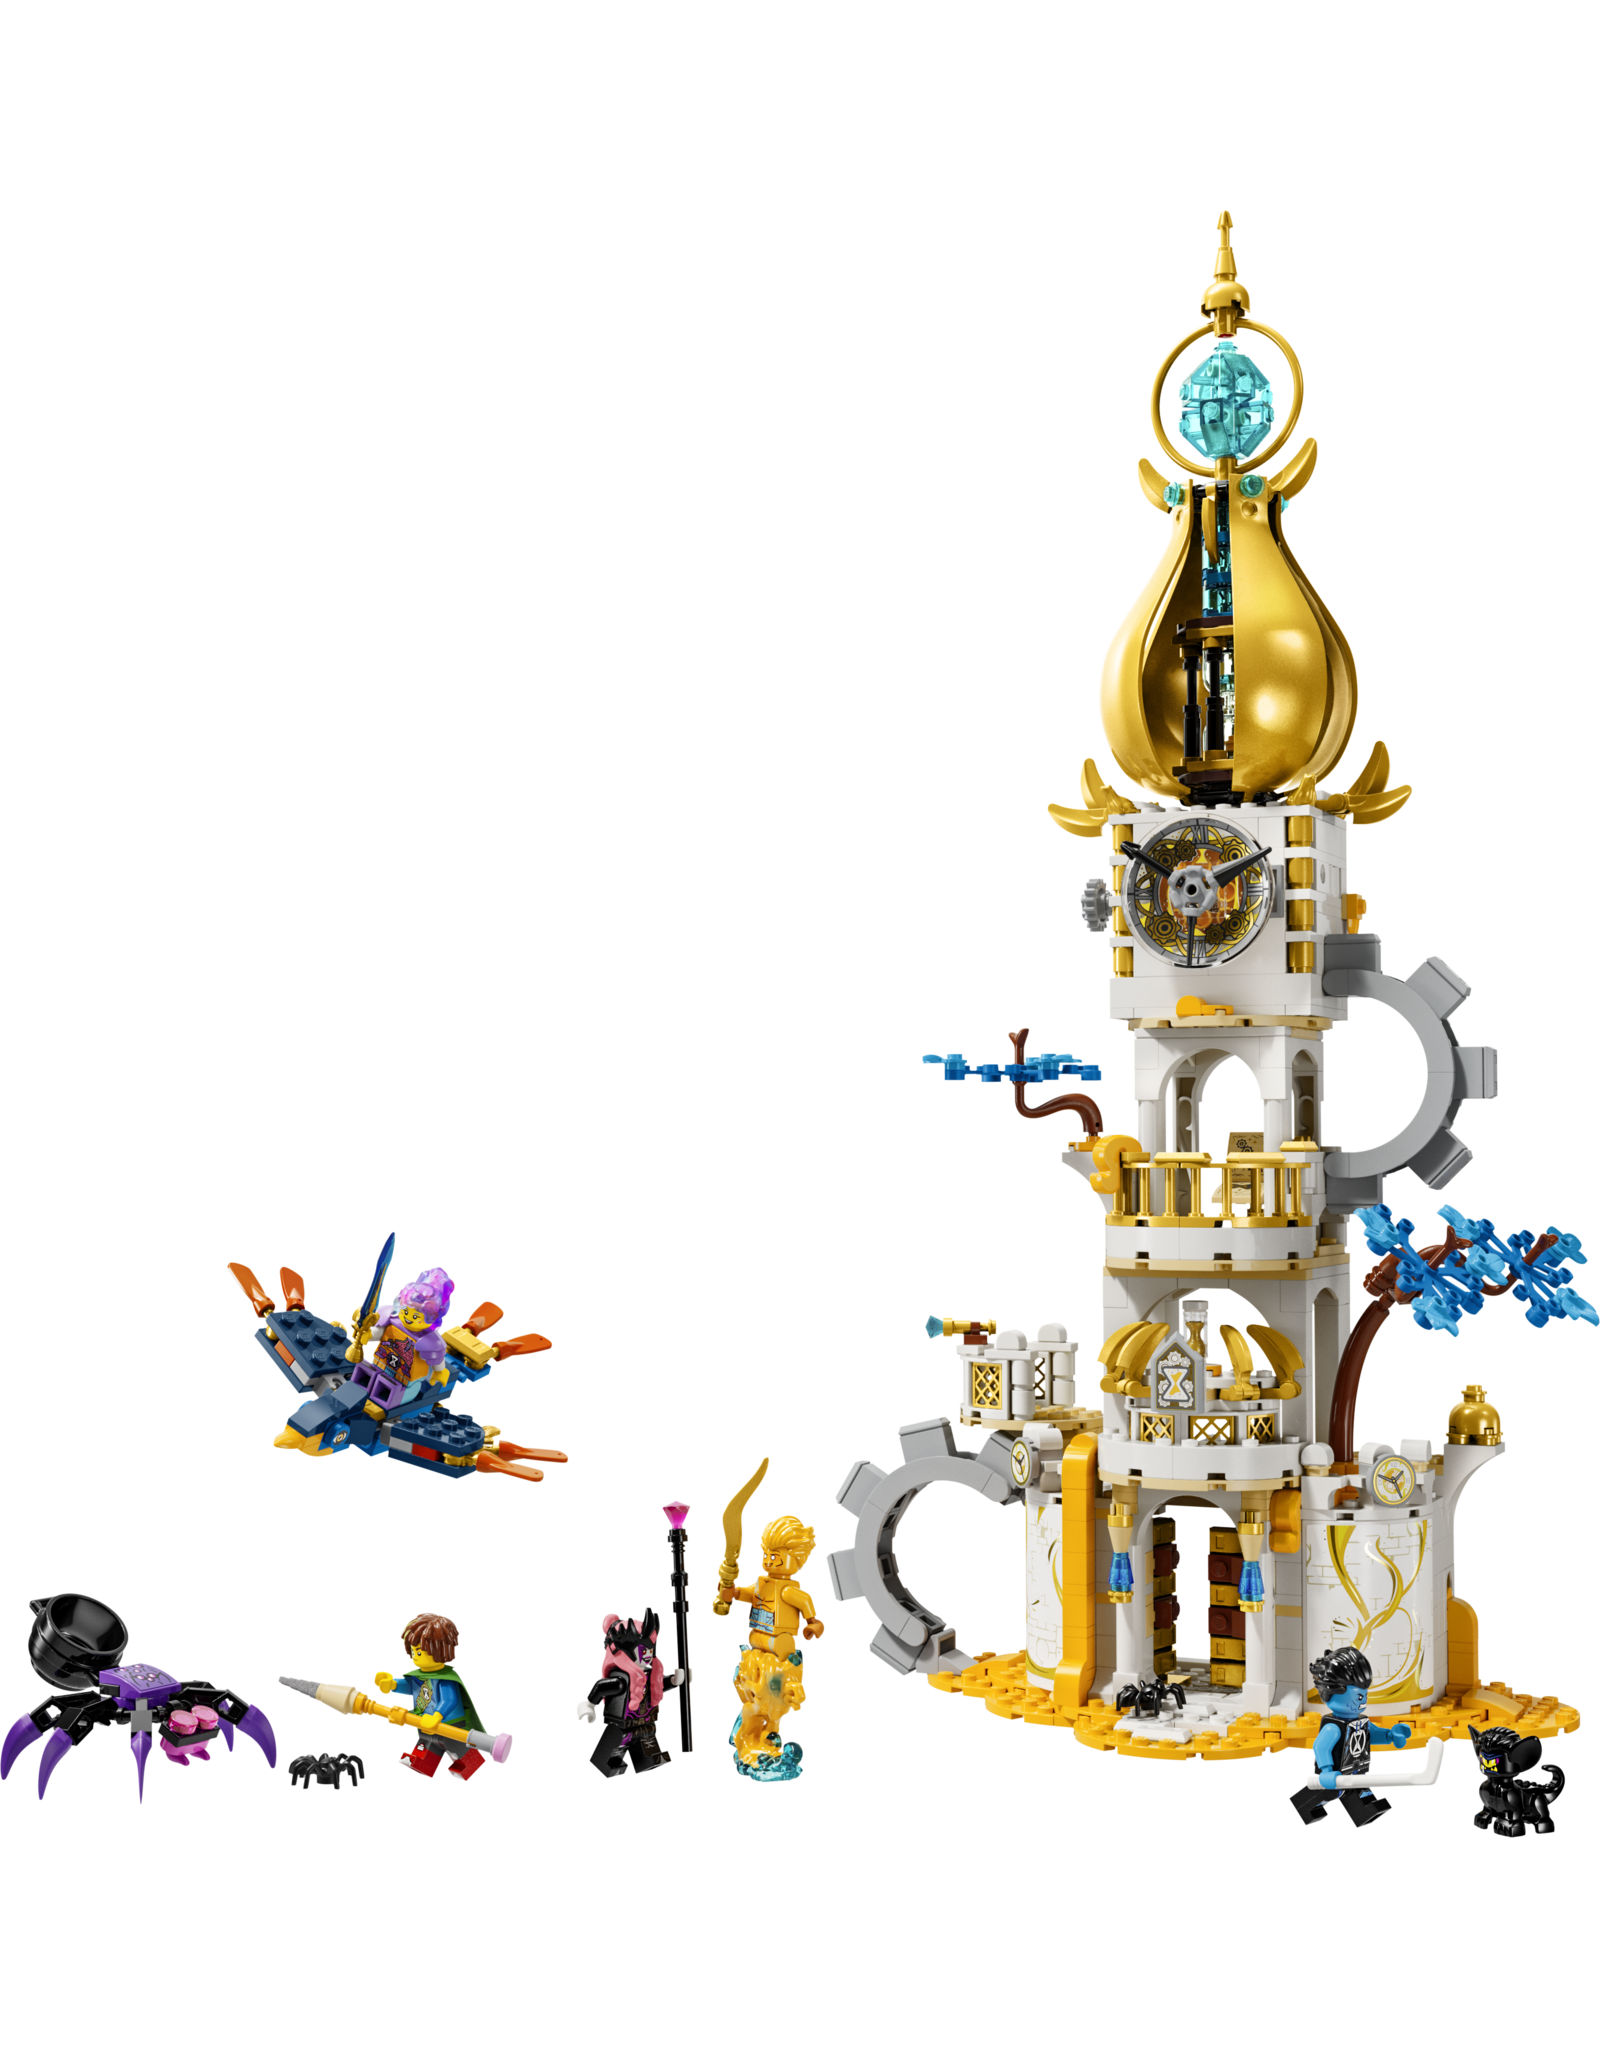 LEGO DREAMZzz 71477 The Sandman's Tower